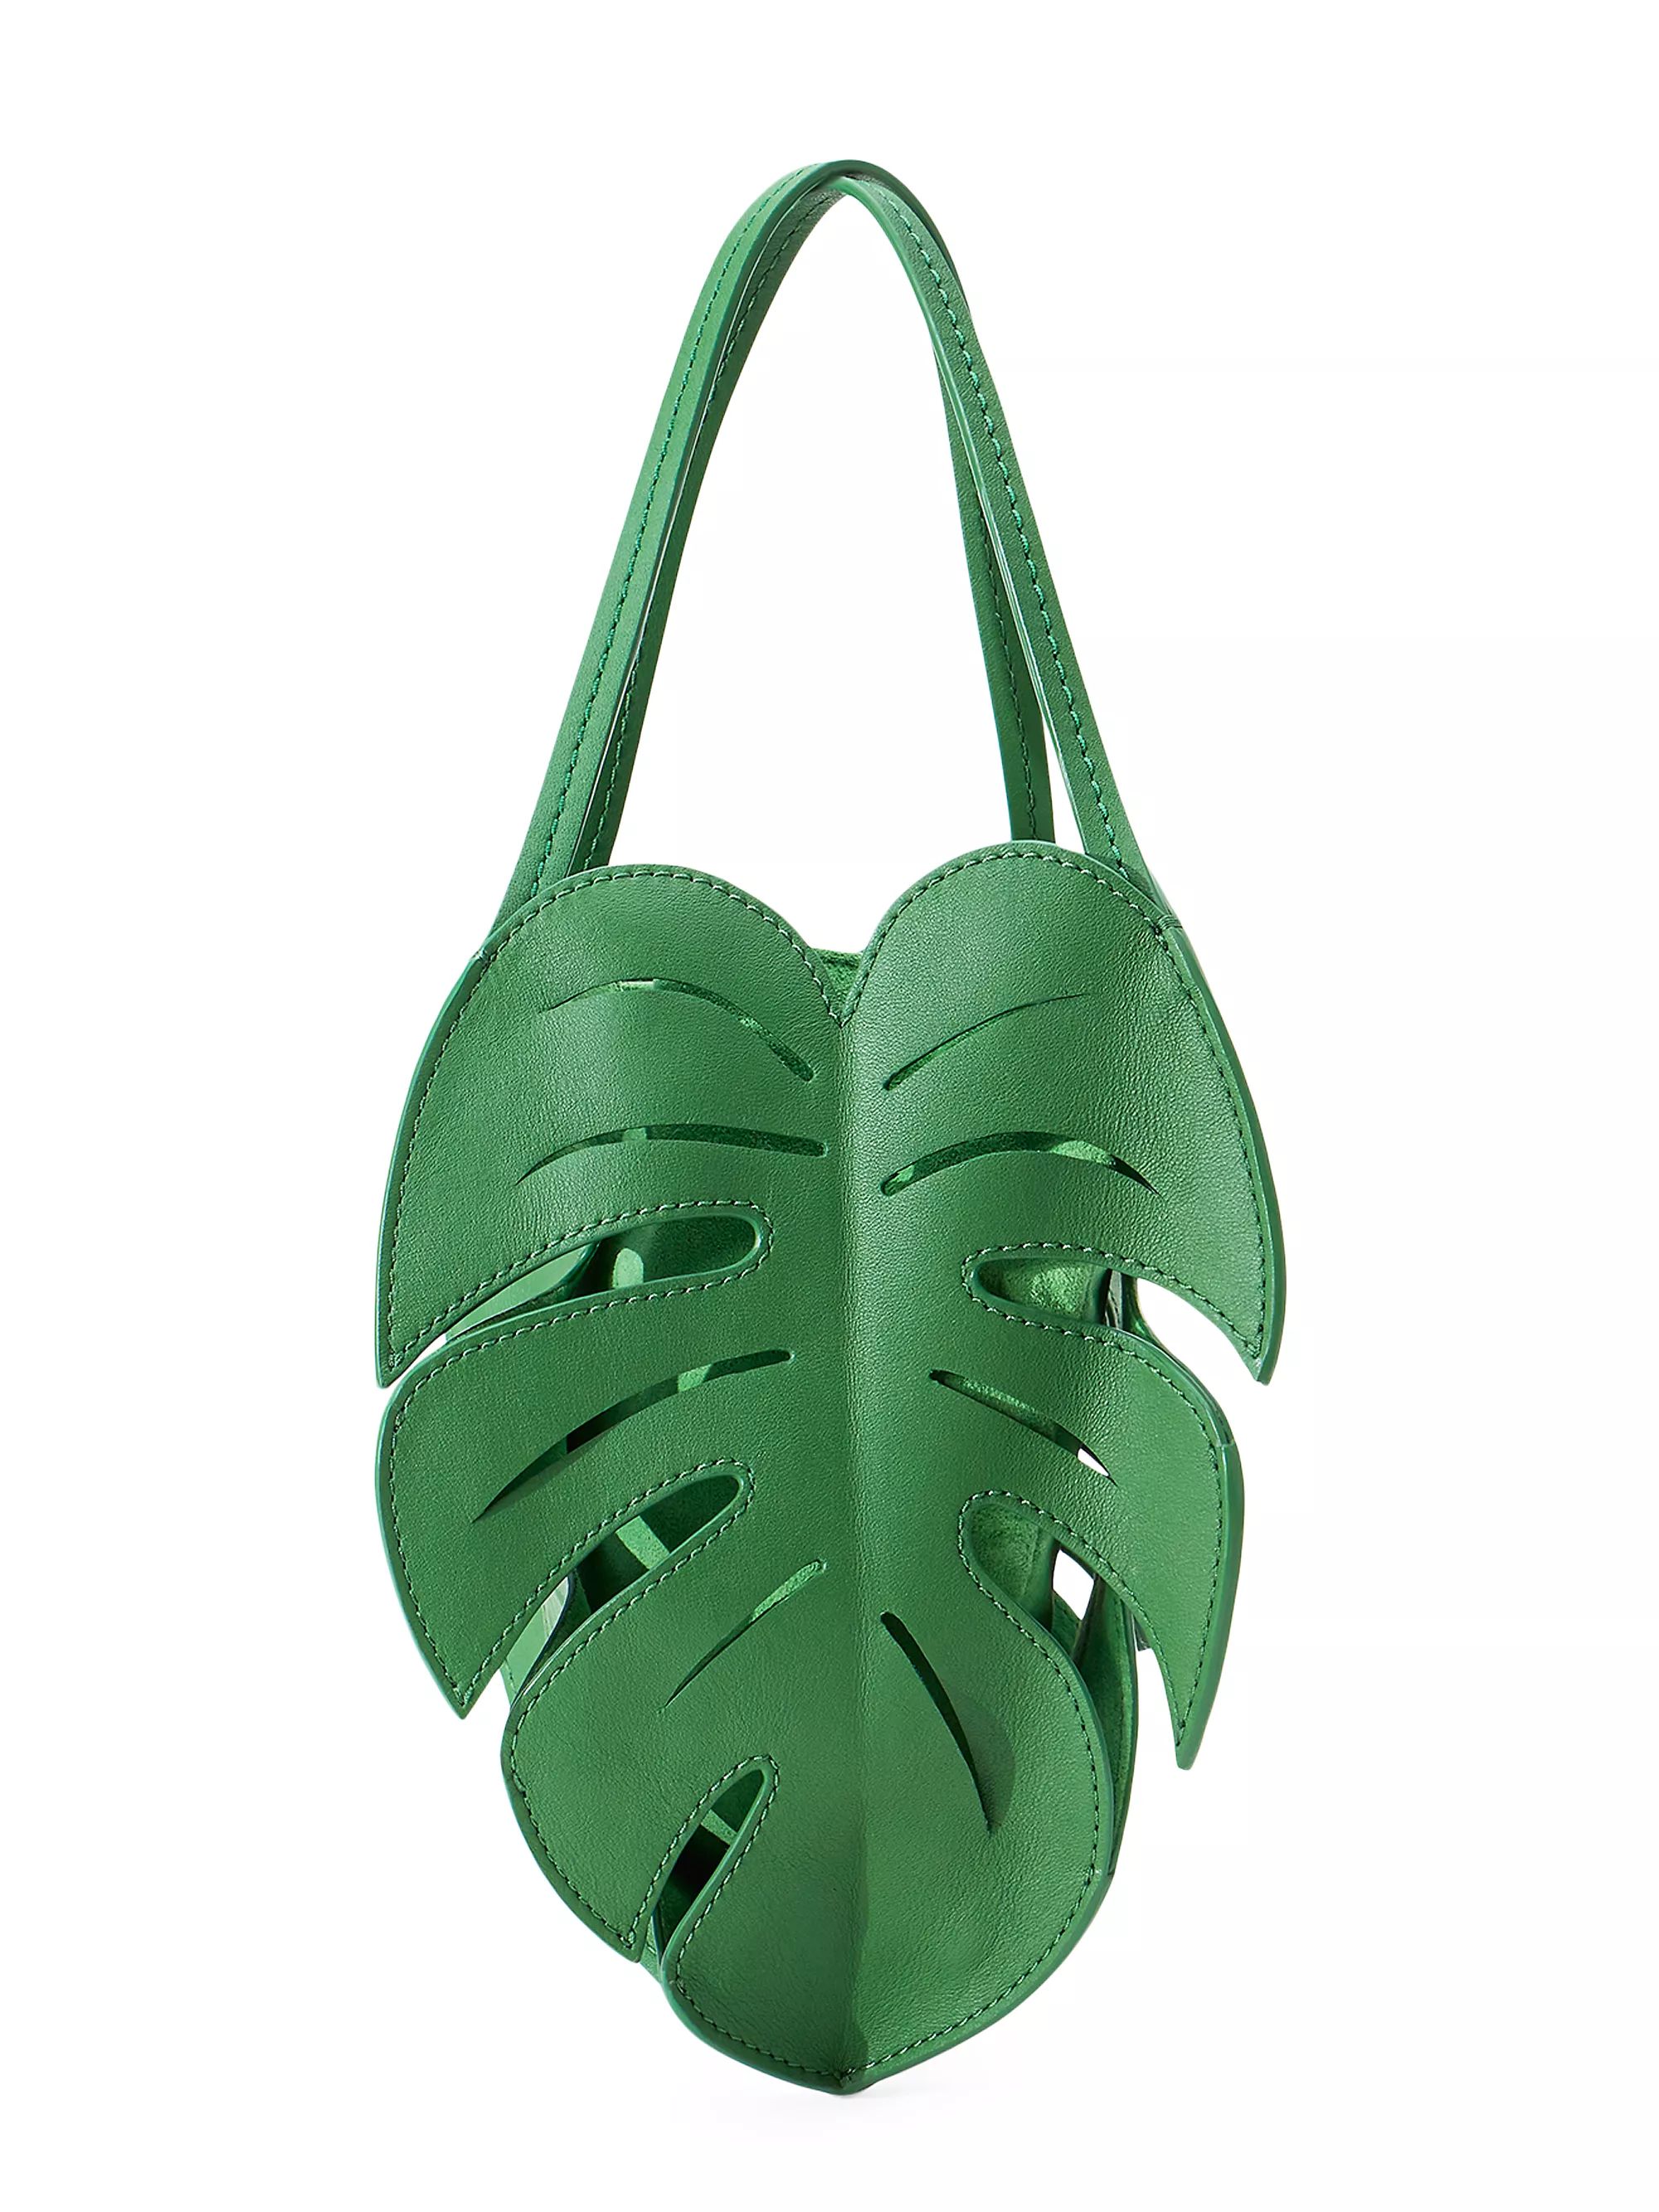 StaudPalm Leather Shoulder Bag | Saks Fifth Avenue